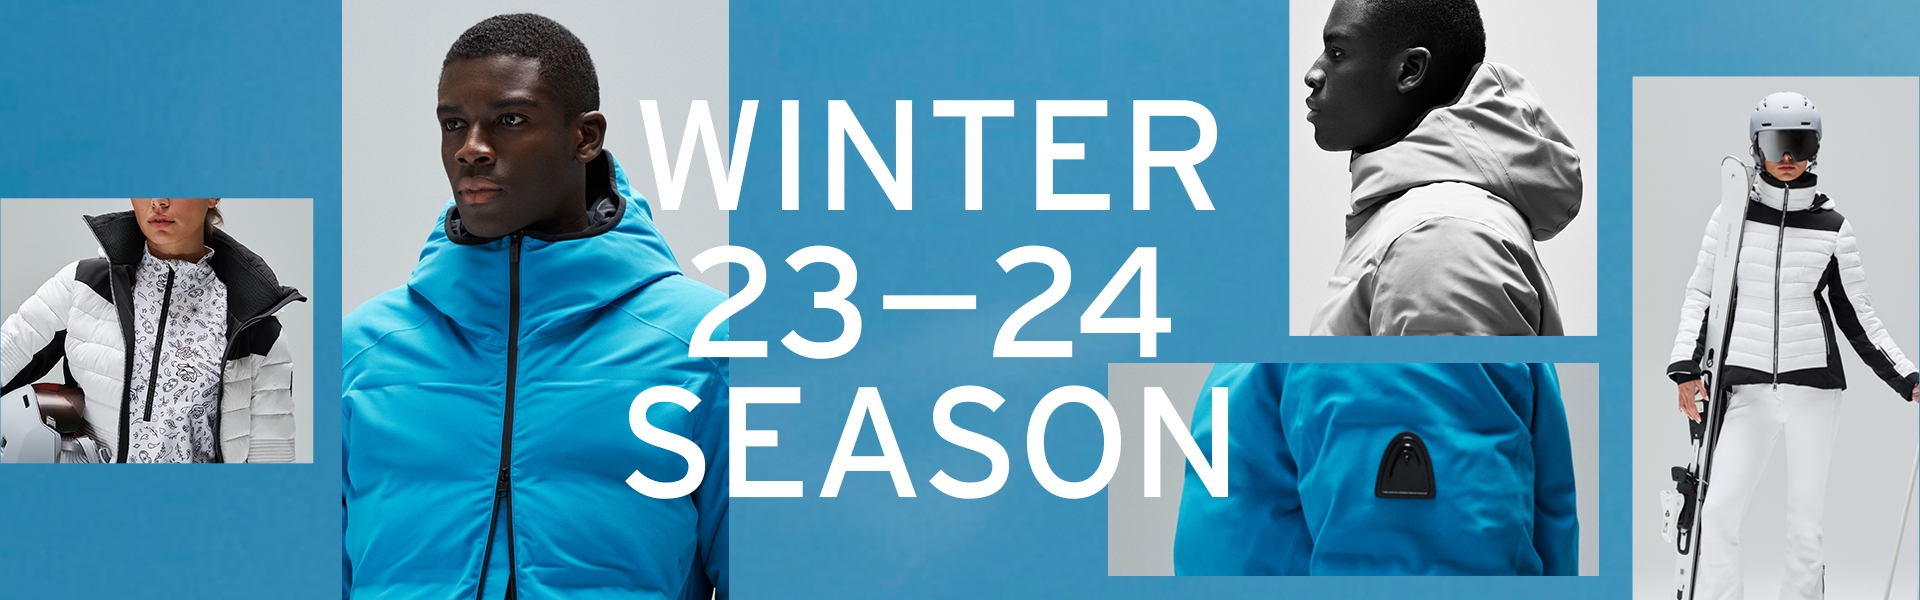 Sportswear Winter 23-24 season Header Banner eith Headline